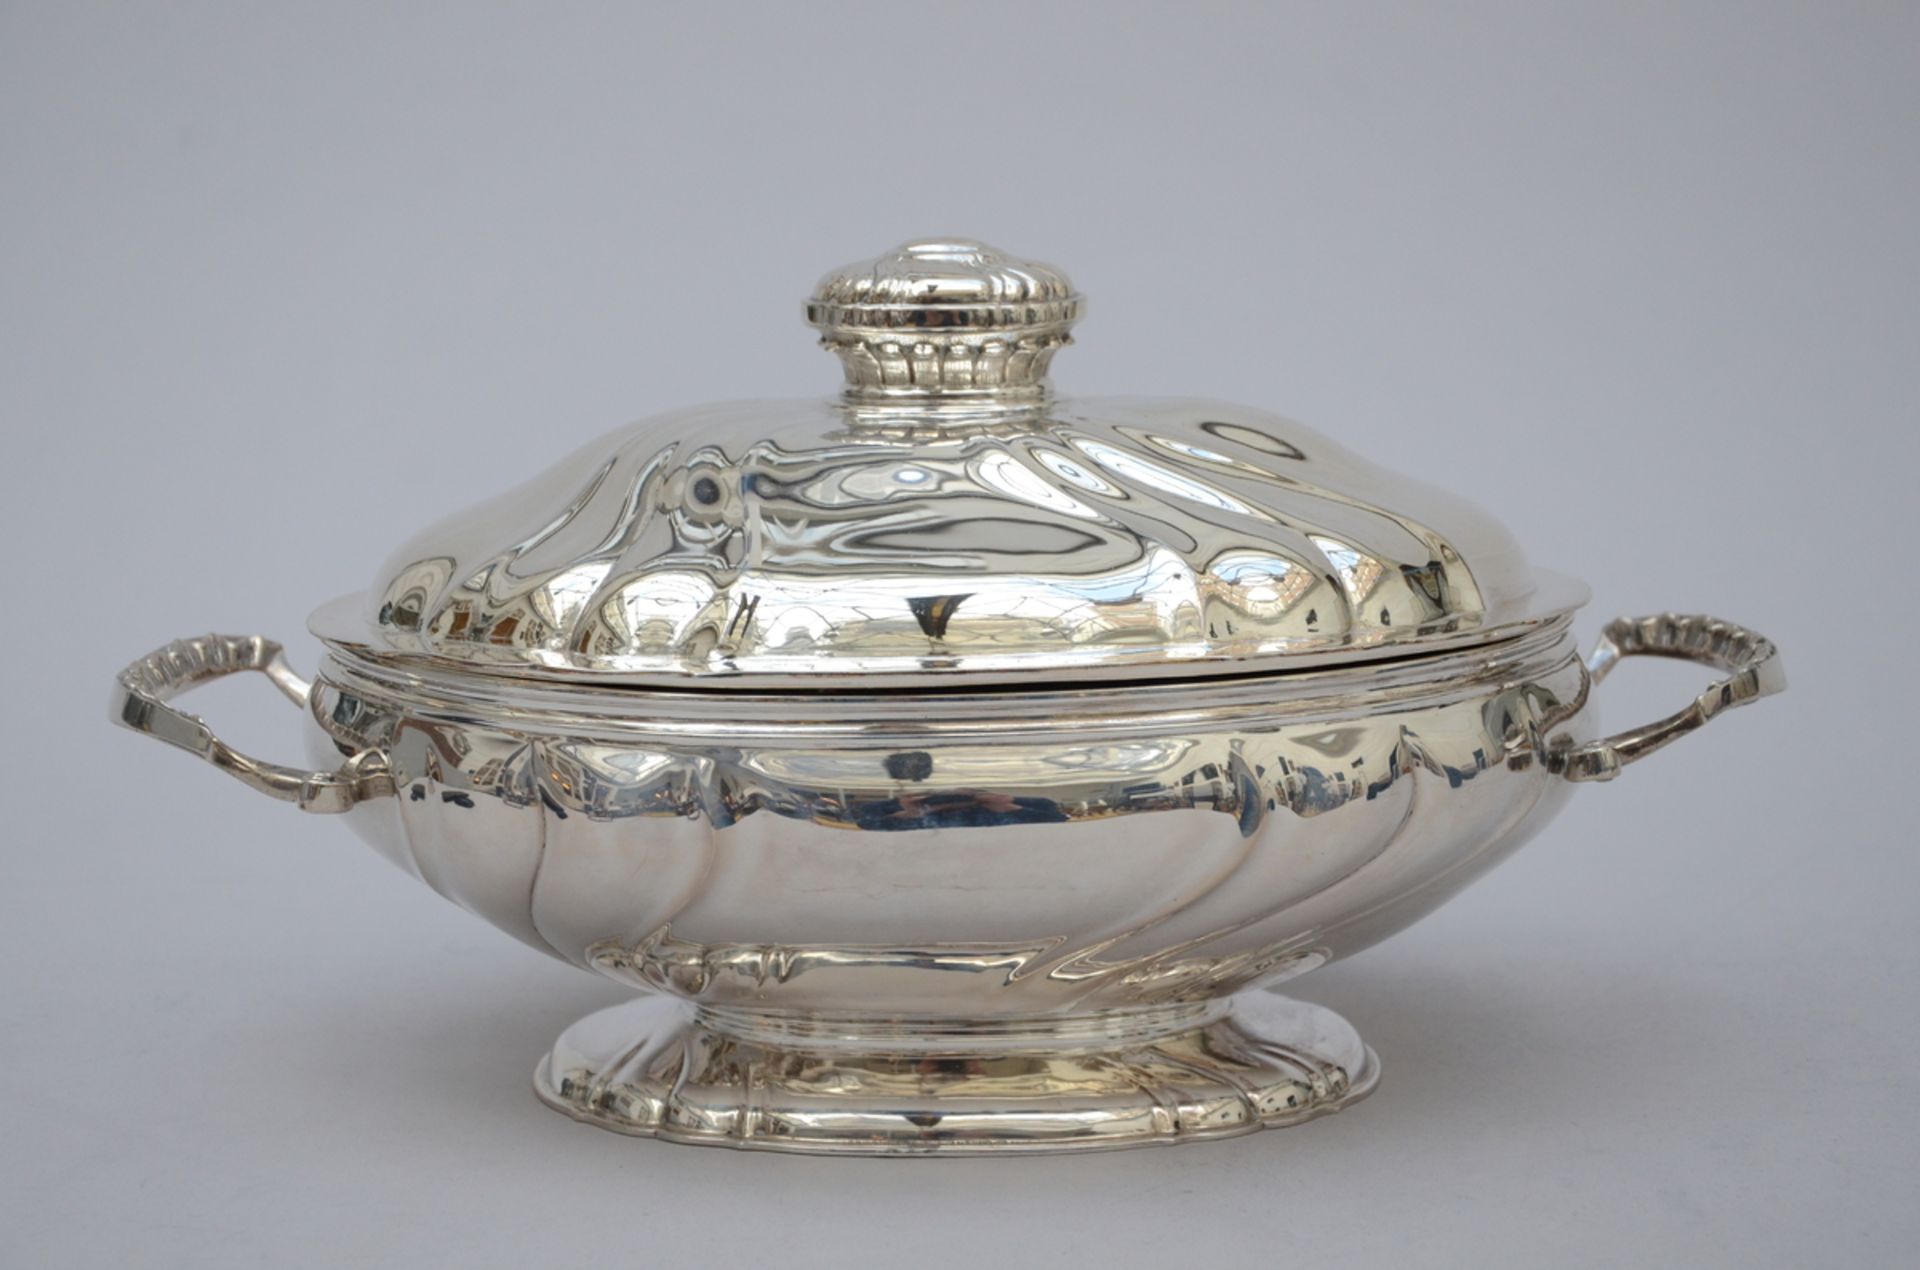 A silver vegetable bowl (19x35x19.5cm)